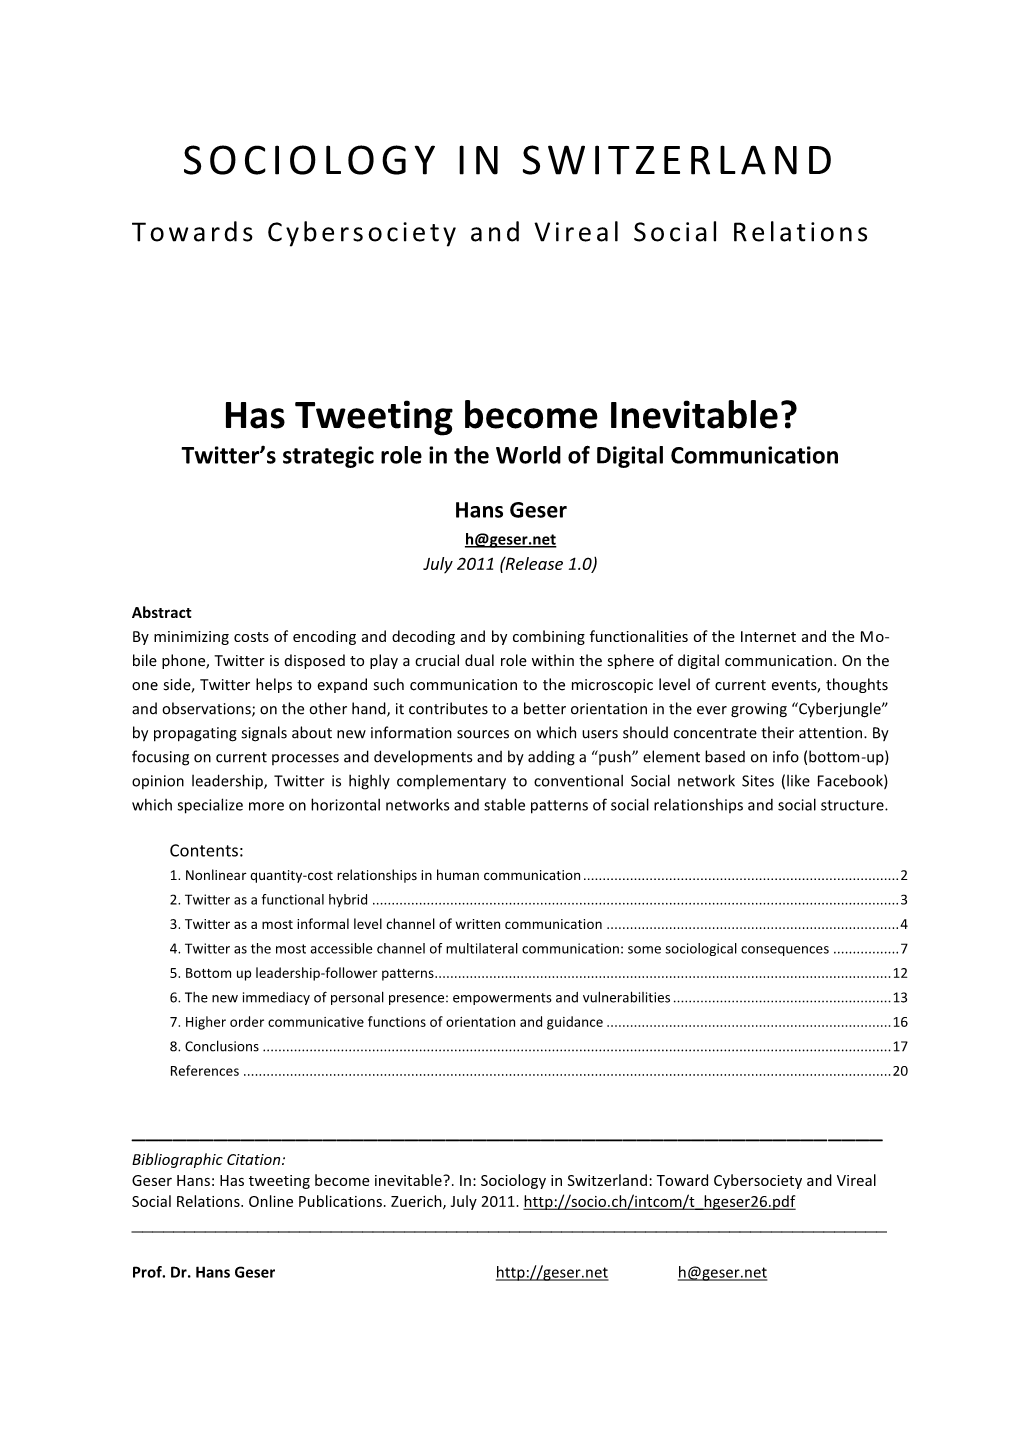 Has Tweeting Become Inevitable? Twitter's